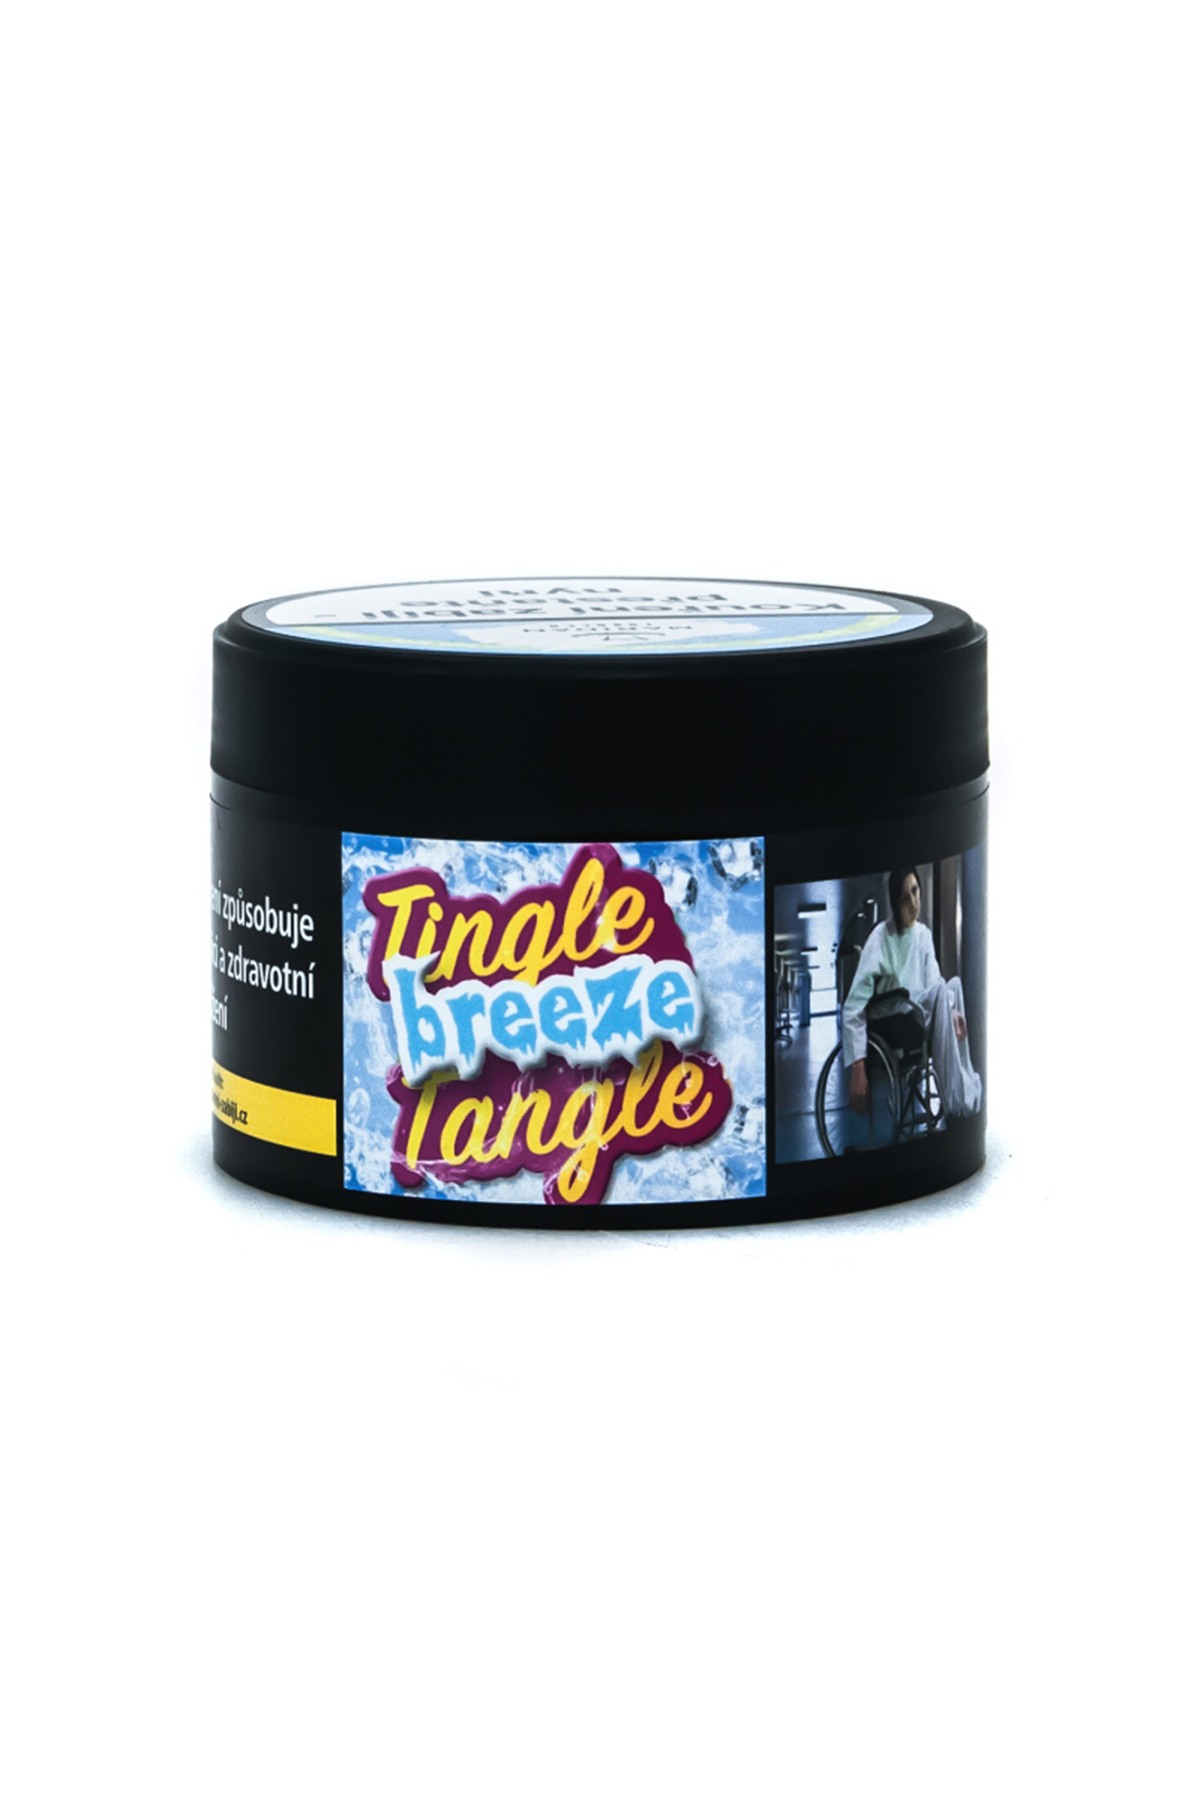 Tabák - Maridan 50g - Tingle Tangle Breeze